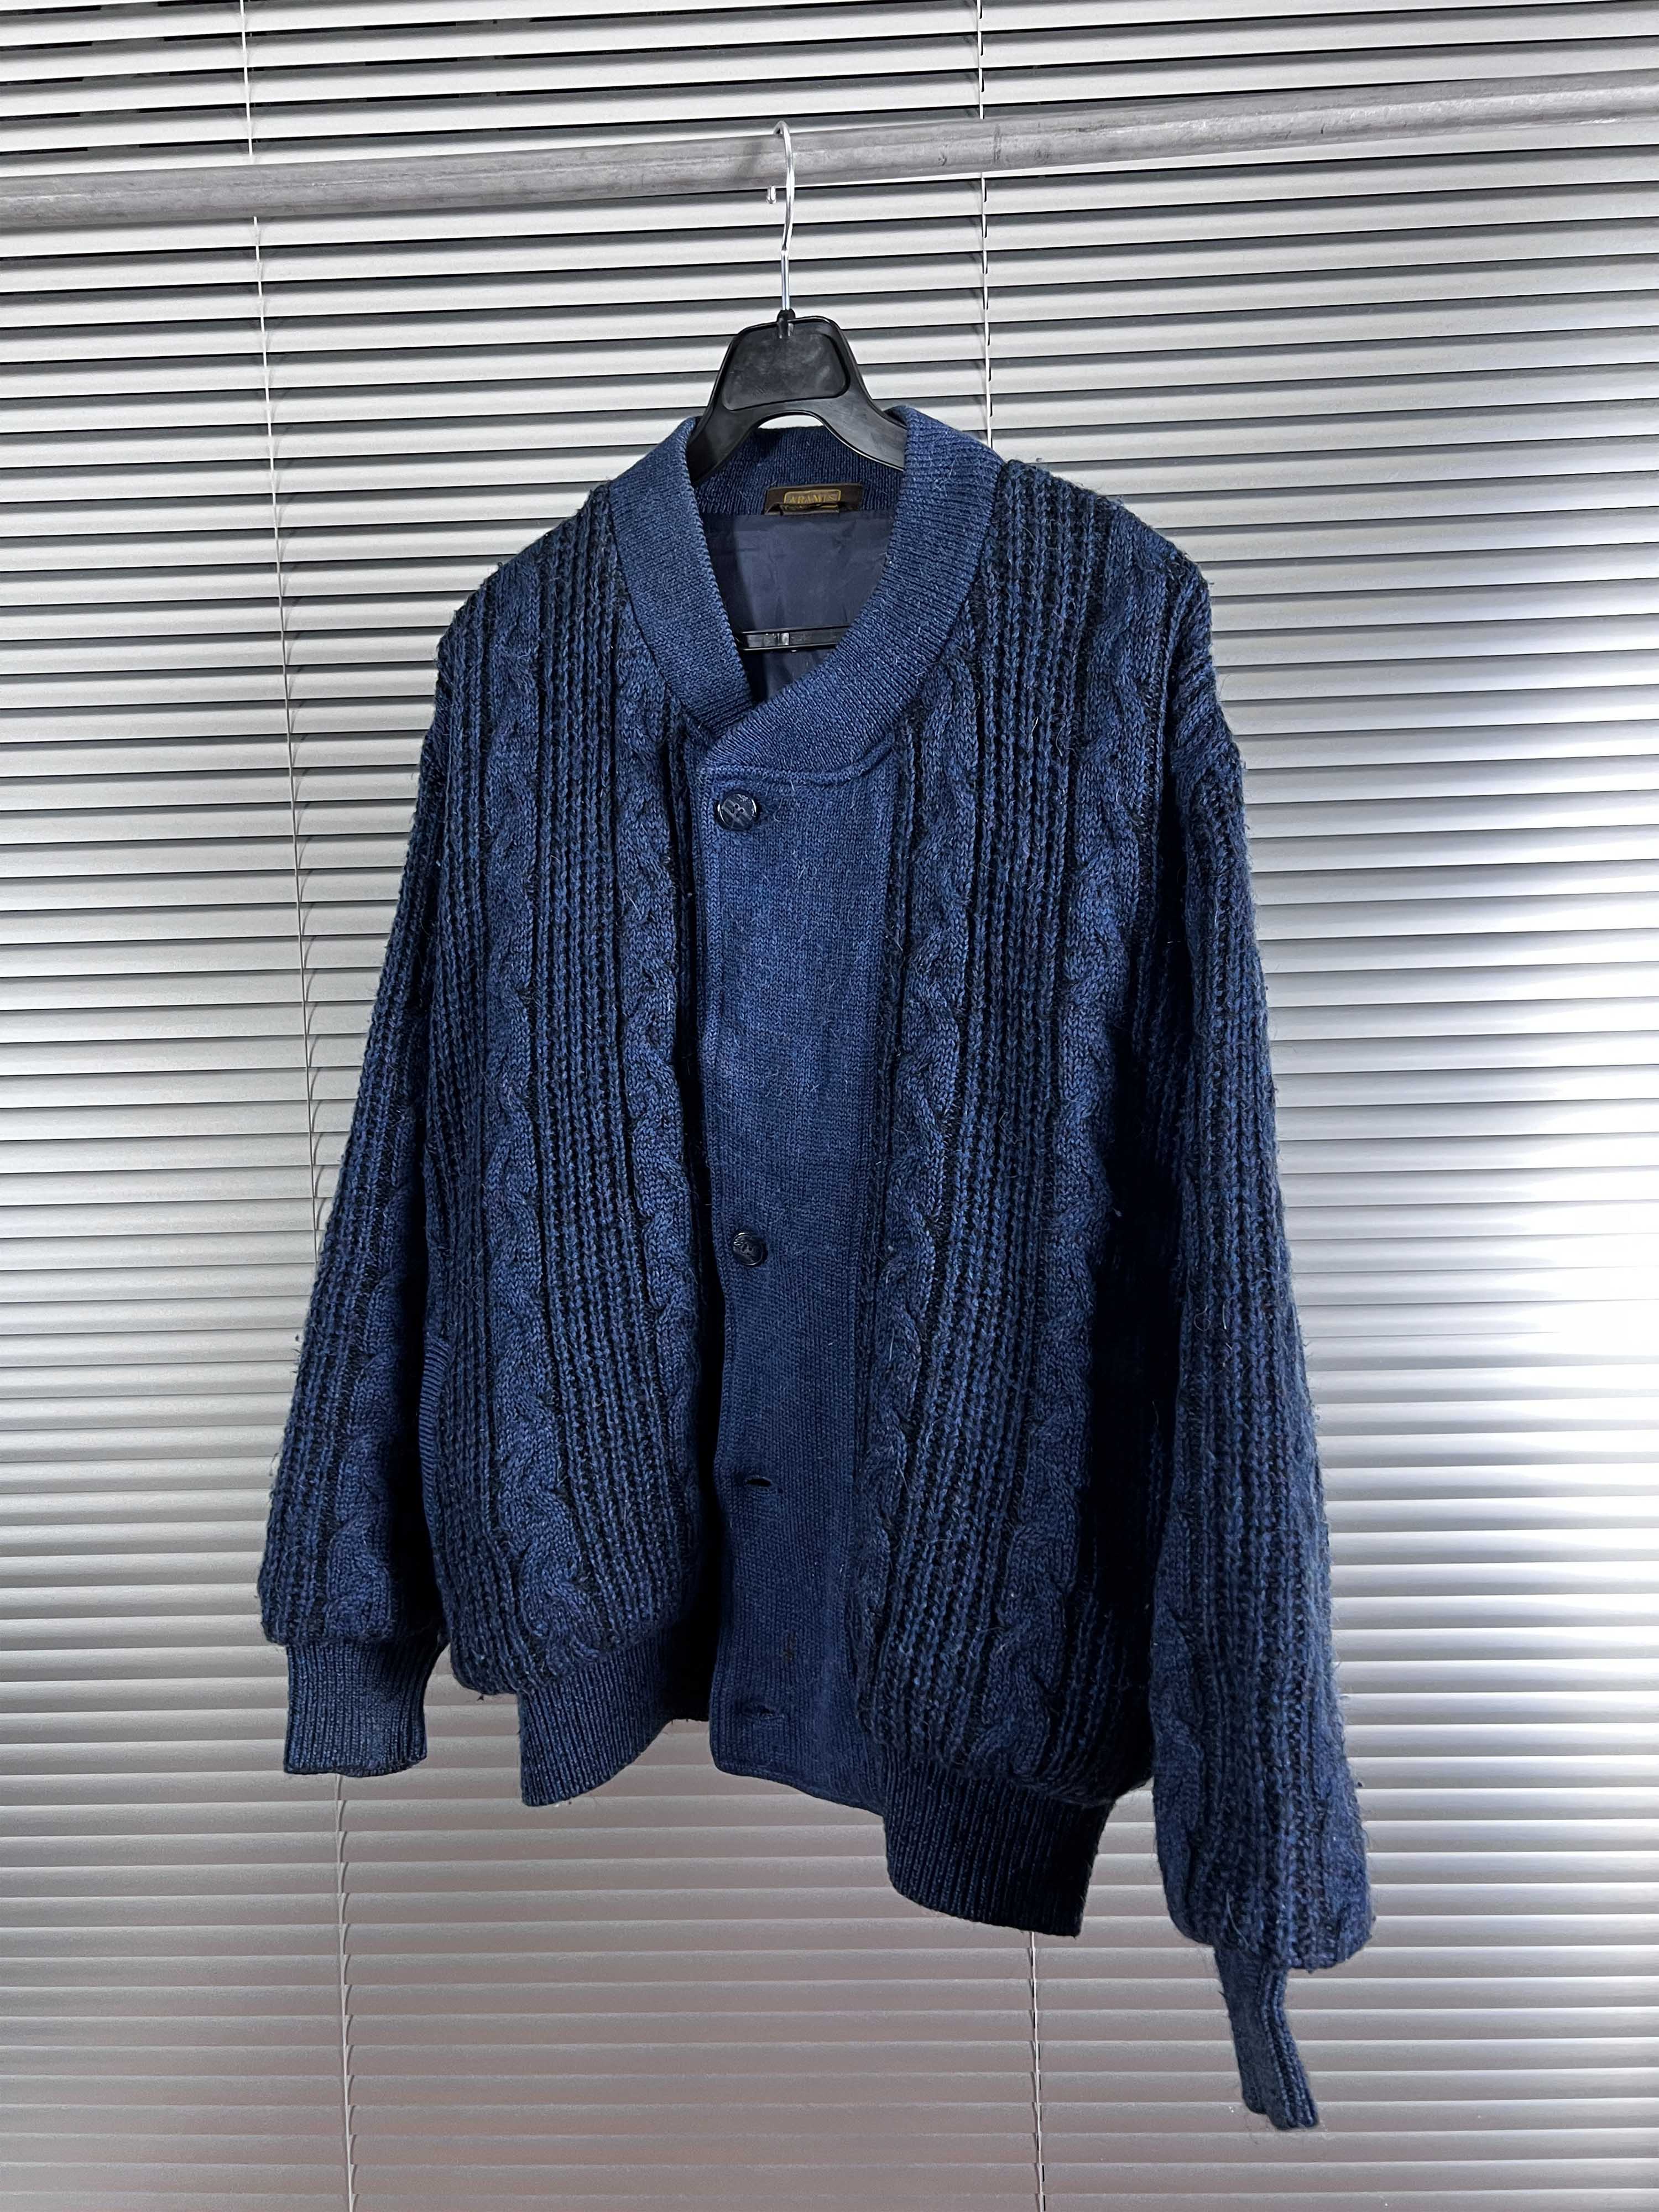 Aramis overfit knit blouson